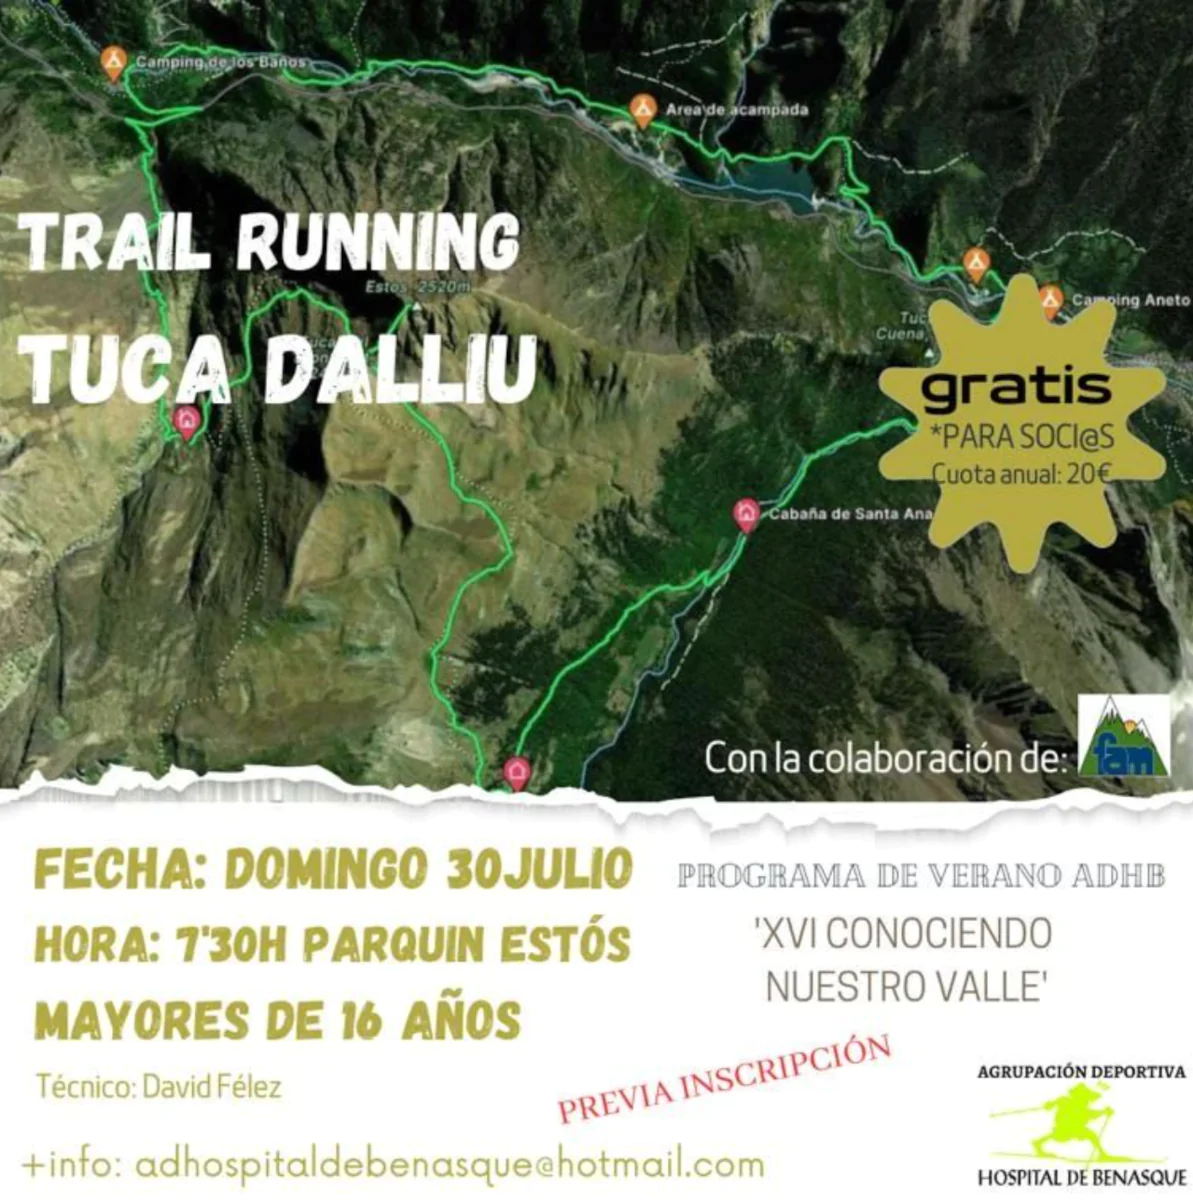 Trail running Tuca Dalliu | enBenas.com